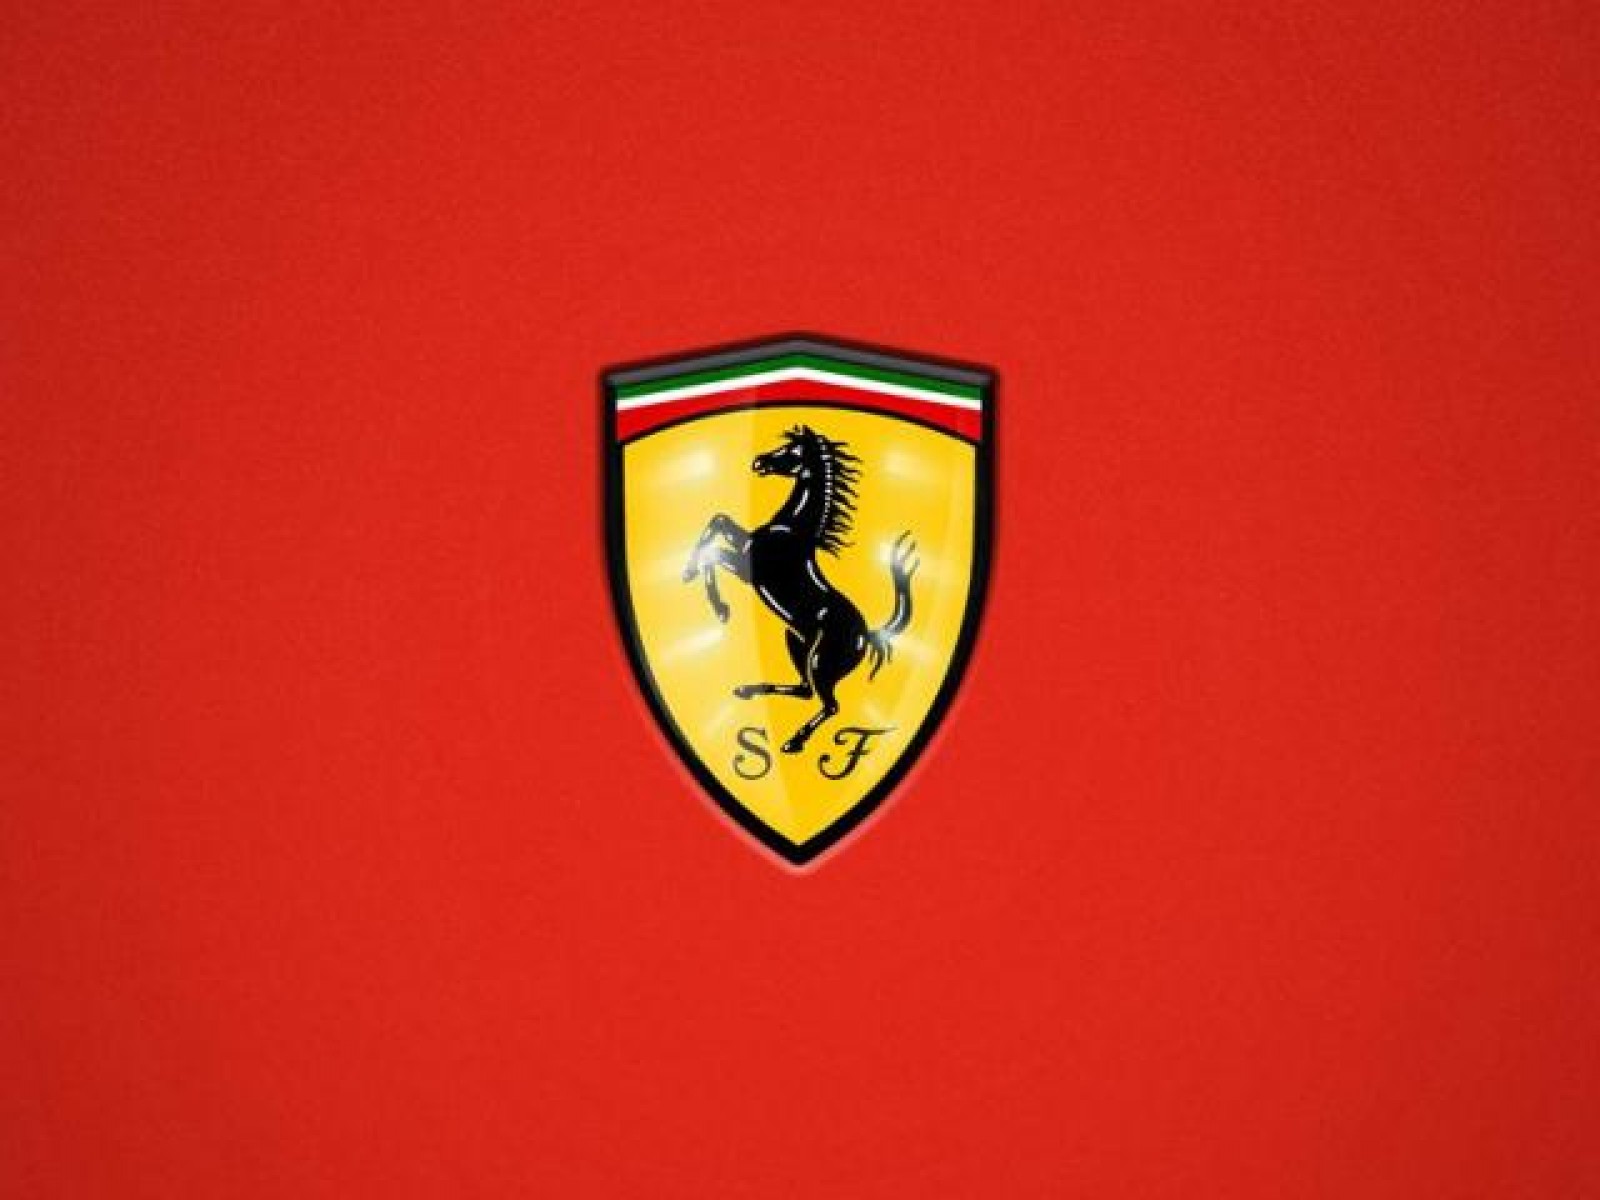 Ferrari Logo Wallpaper Image Galleries